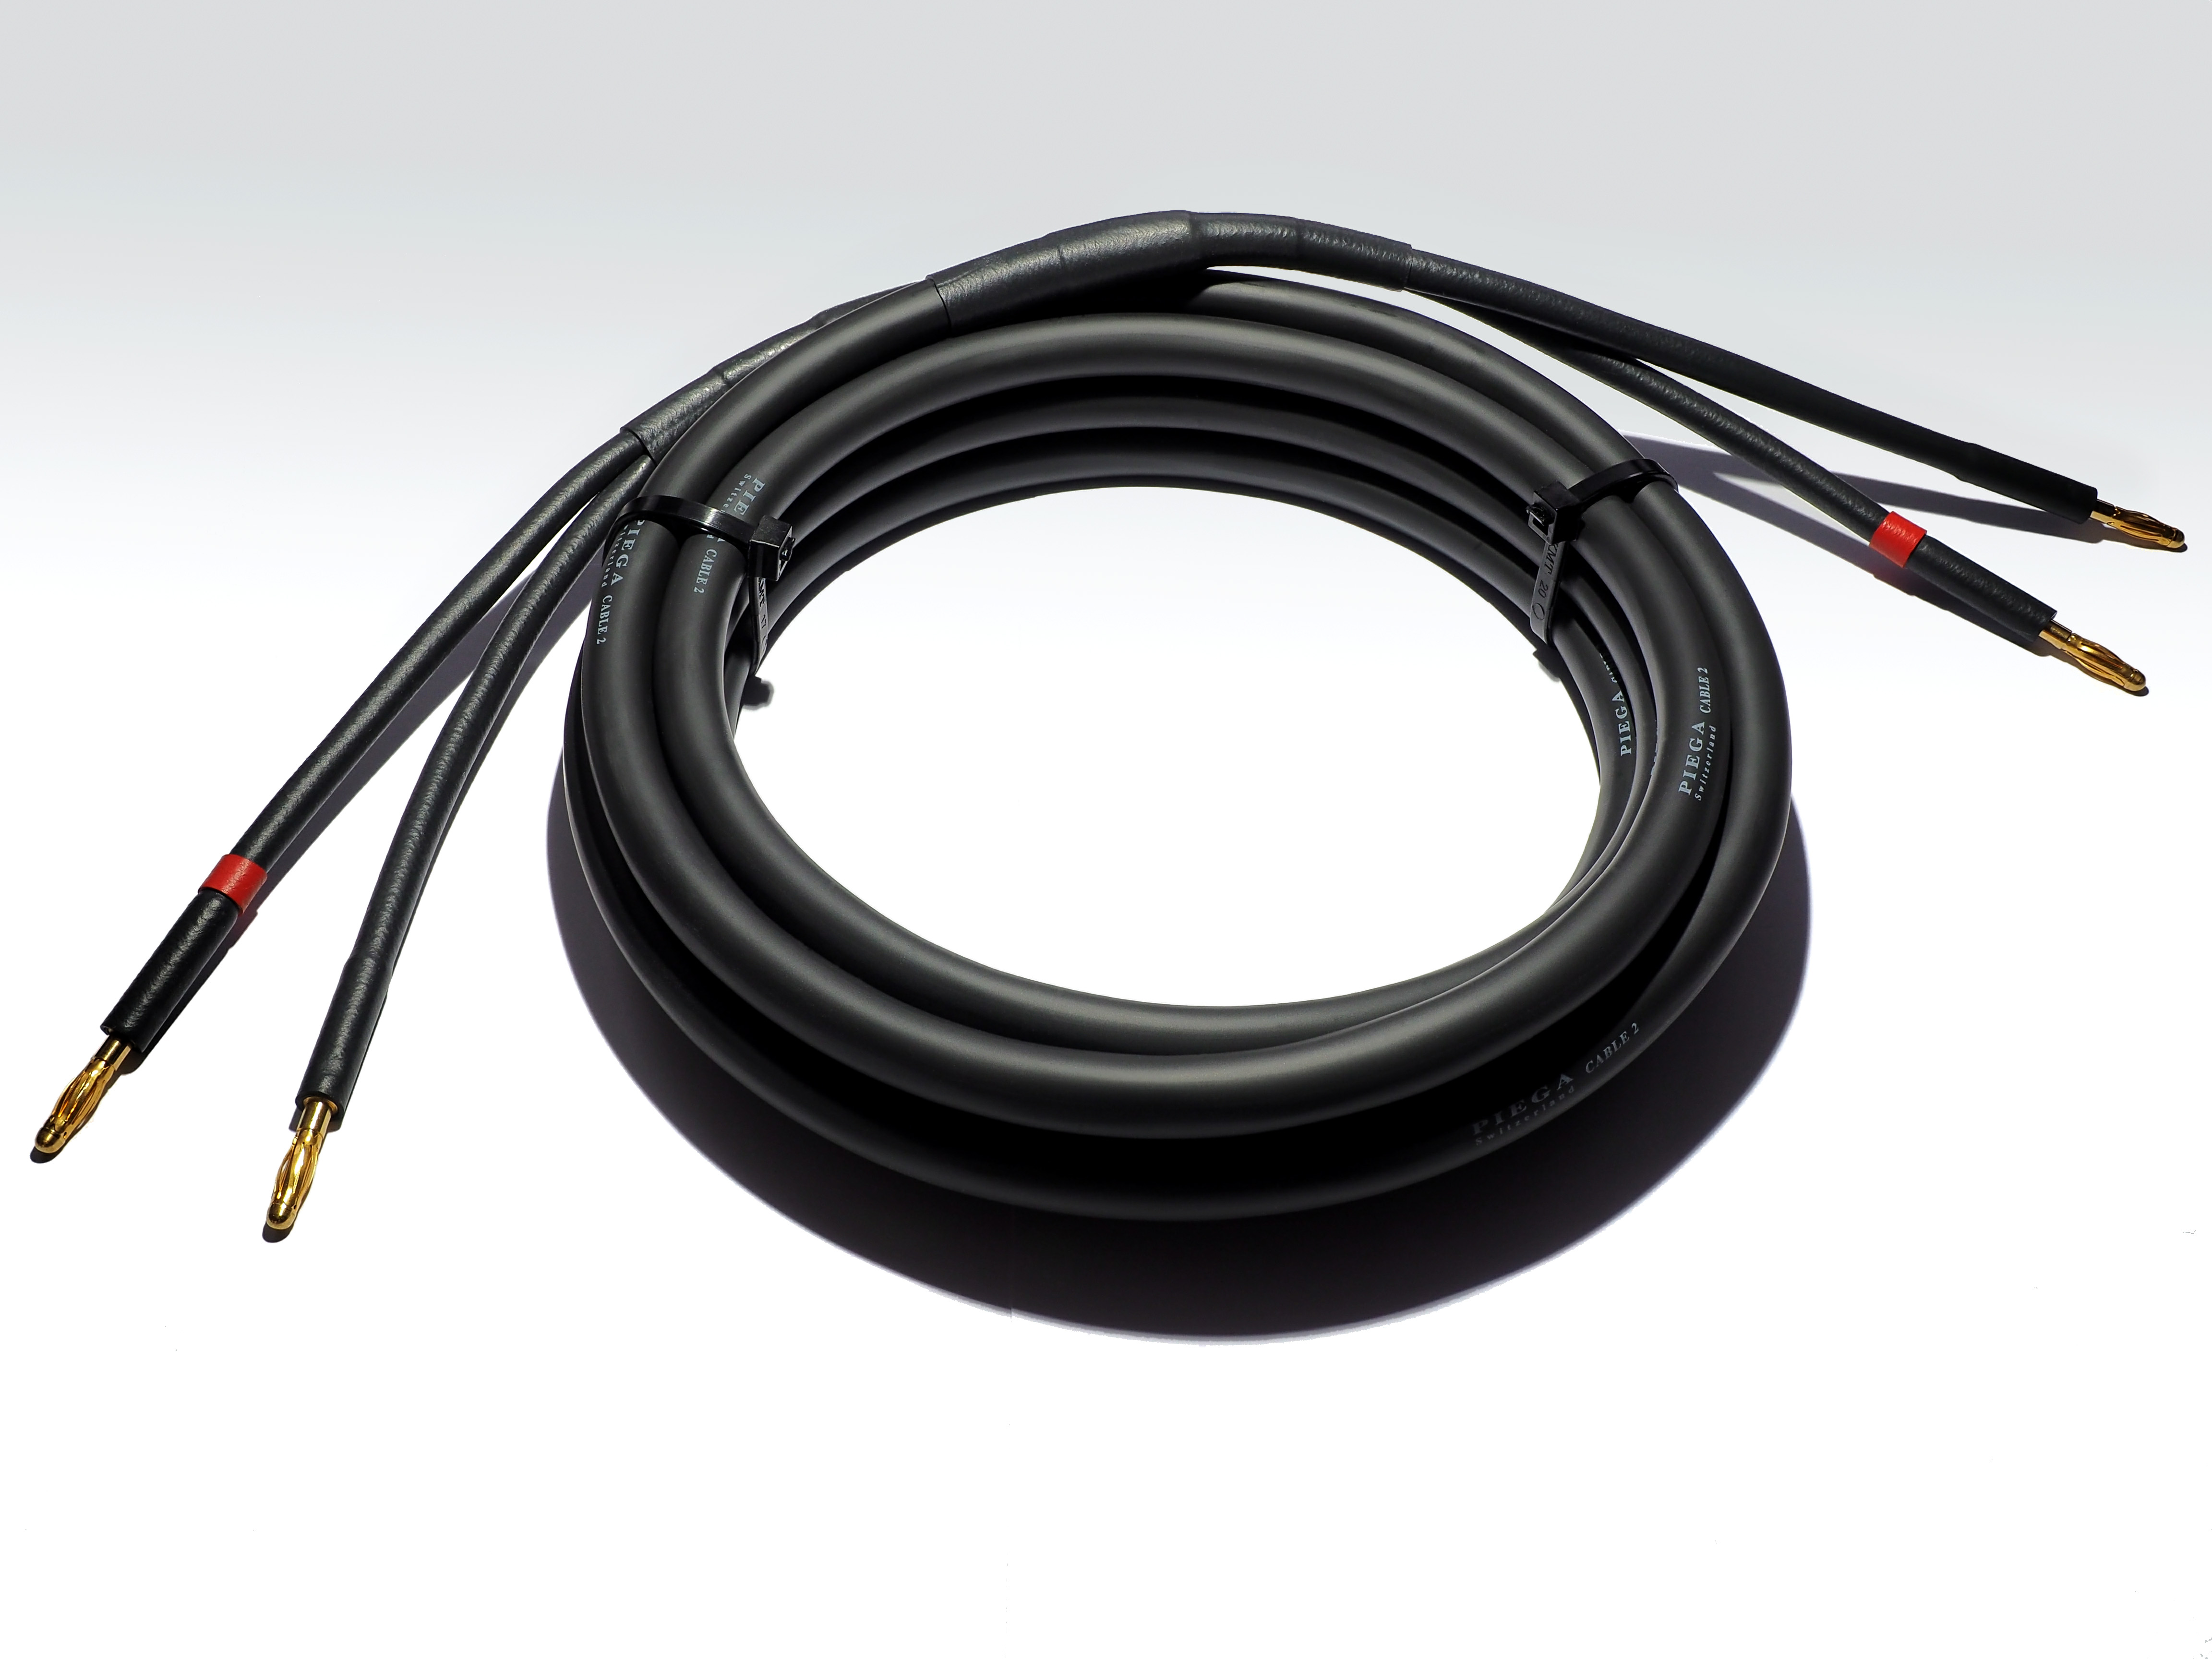 Piega Cable Two 2 x 1.5m / konfektioniert 24 kt. Banana Plugs / Single-Wire